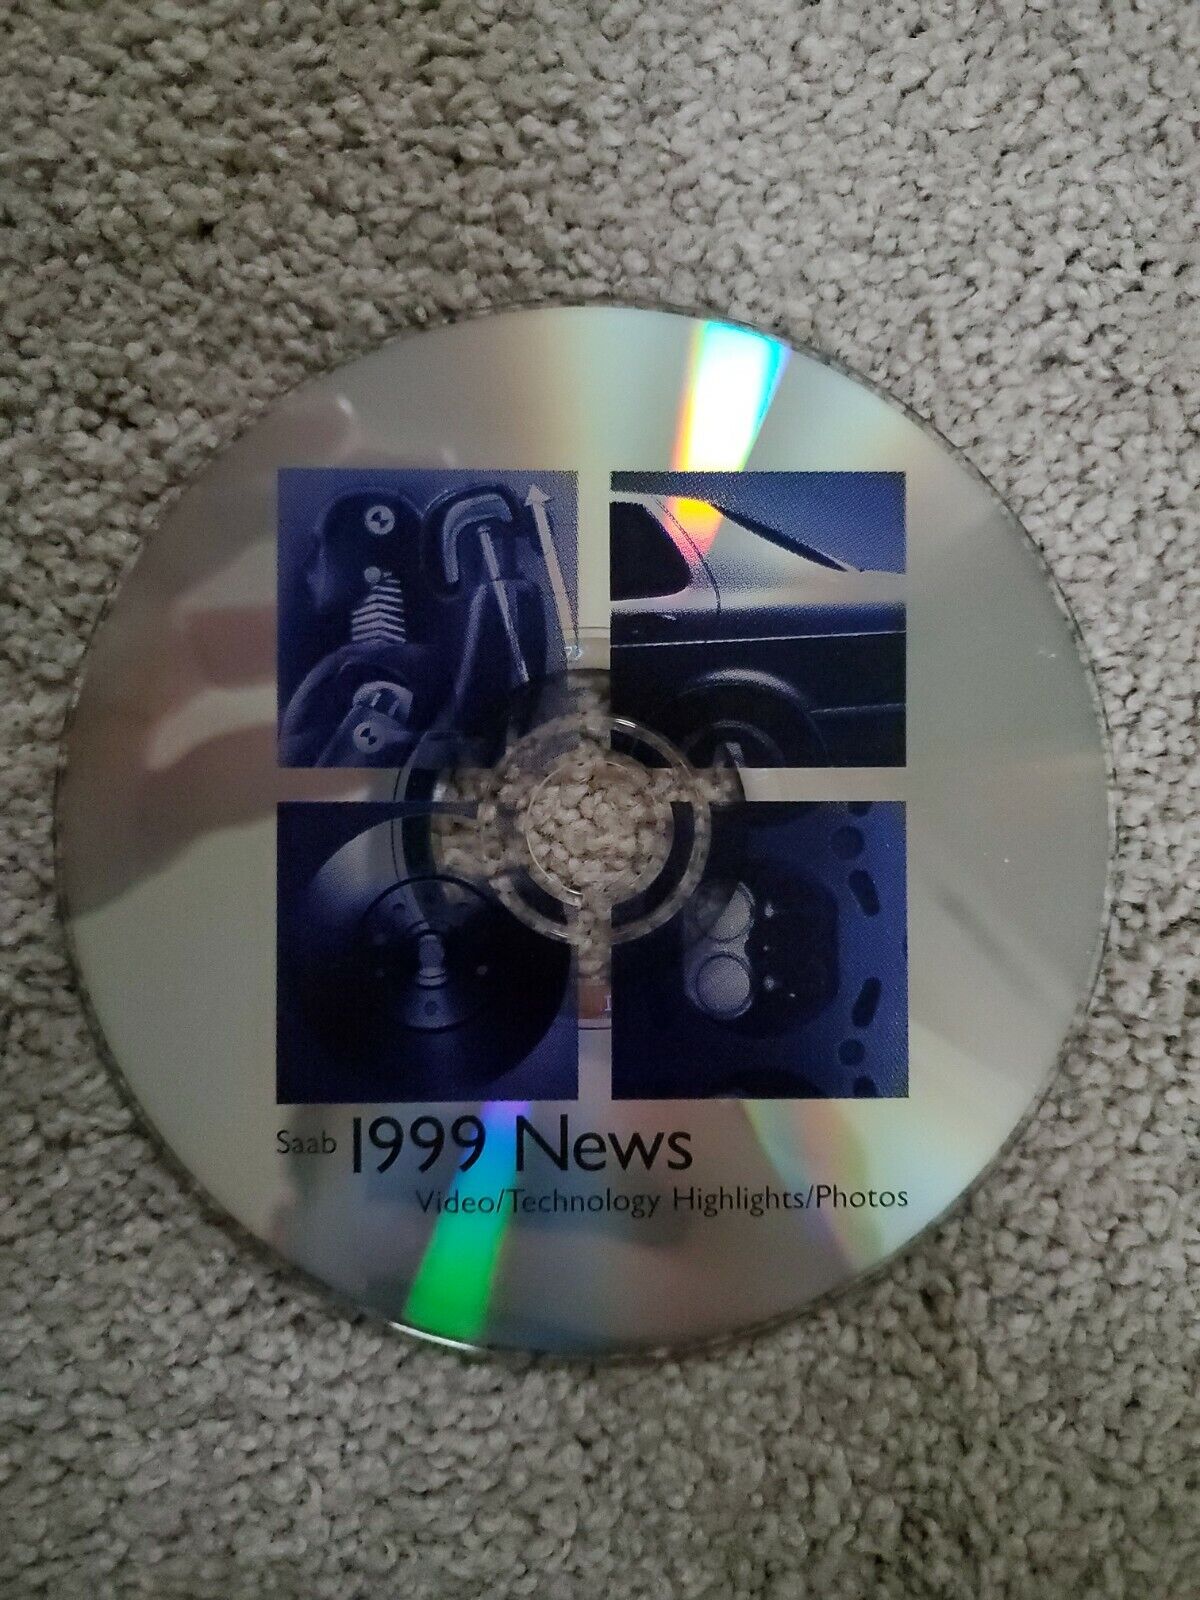 SAAB 1999 News Video/Technology Highlights/Photos DVD/CD